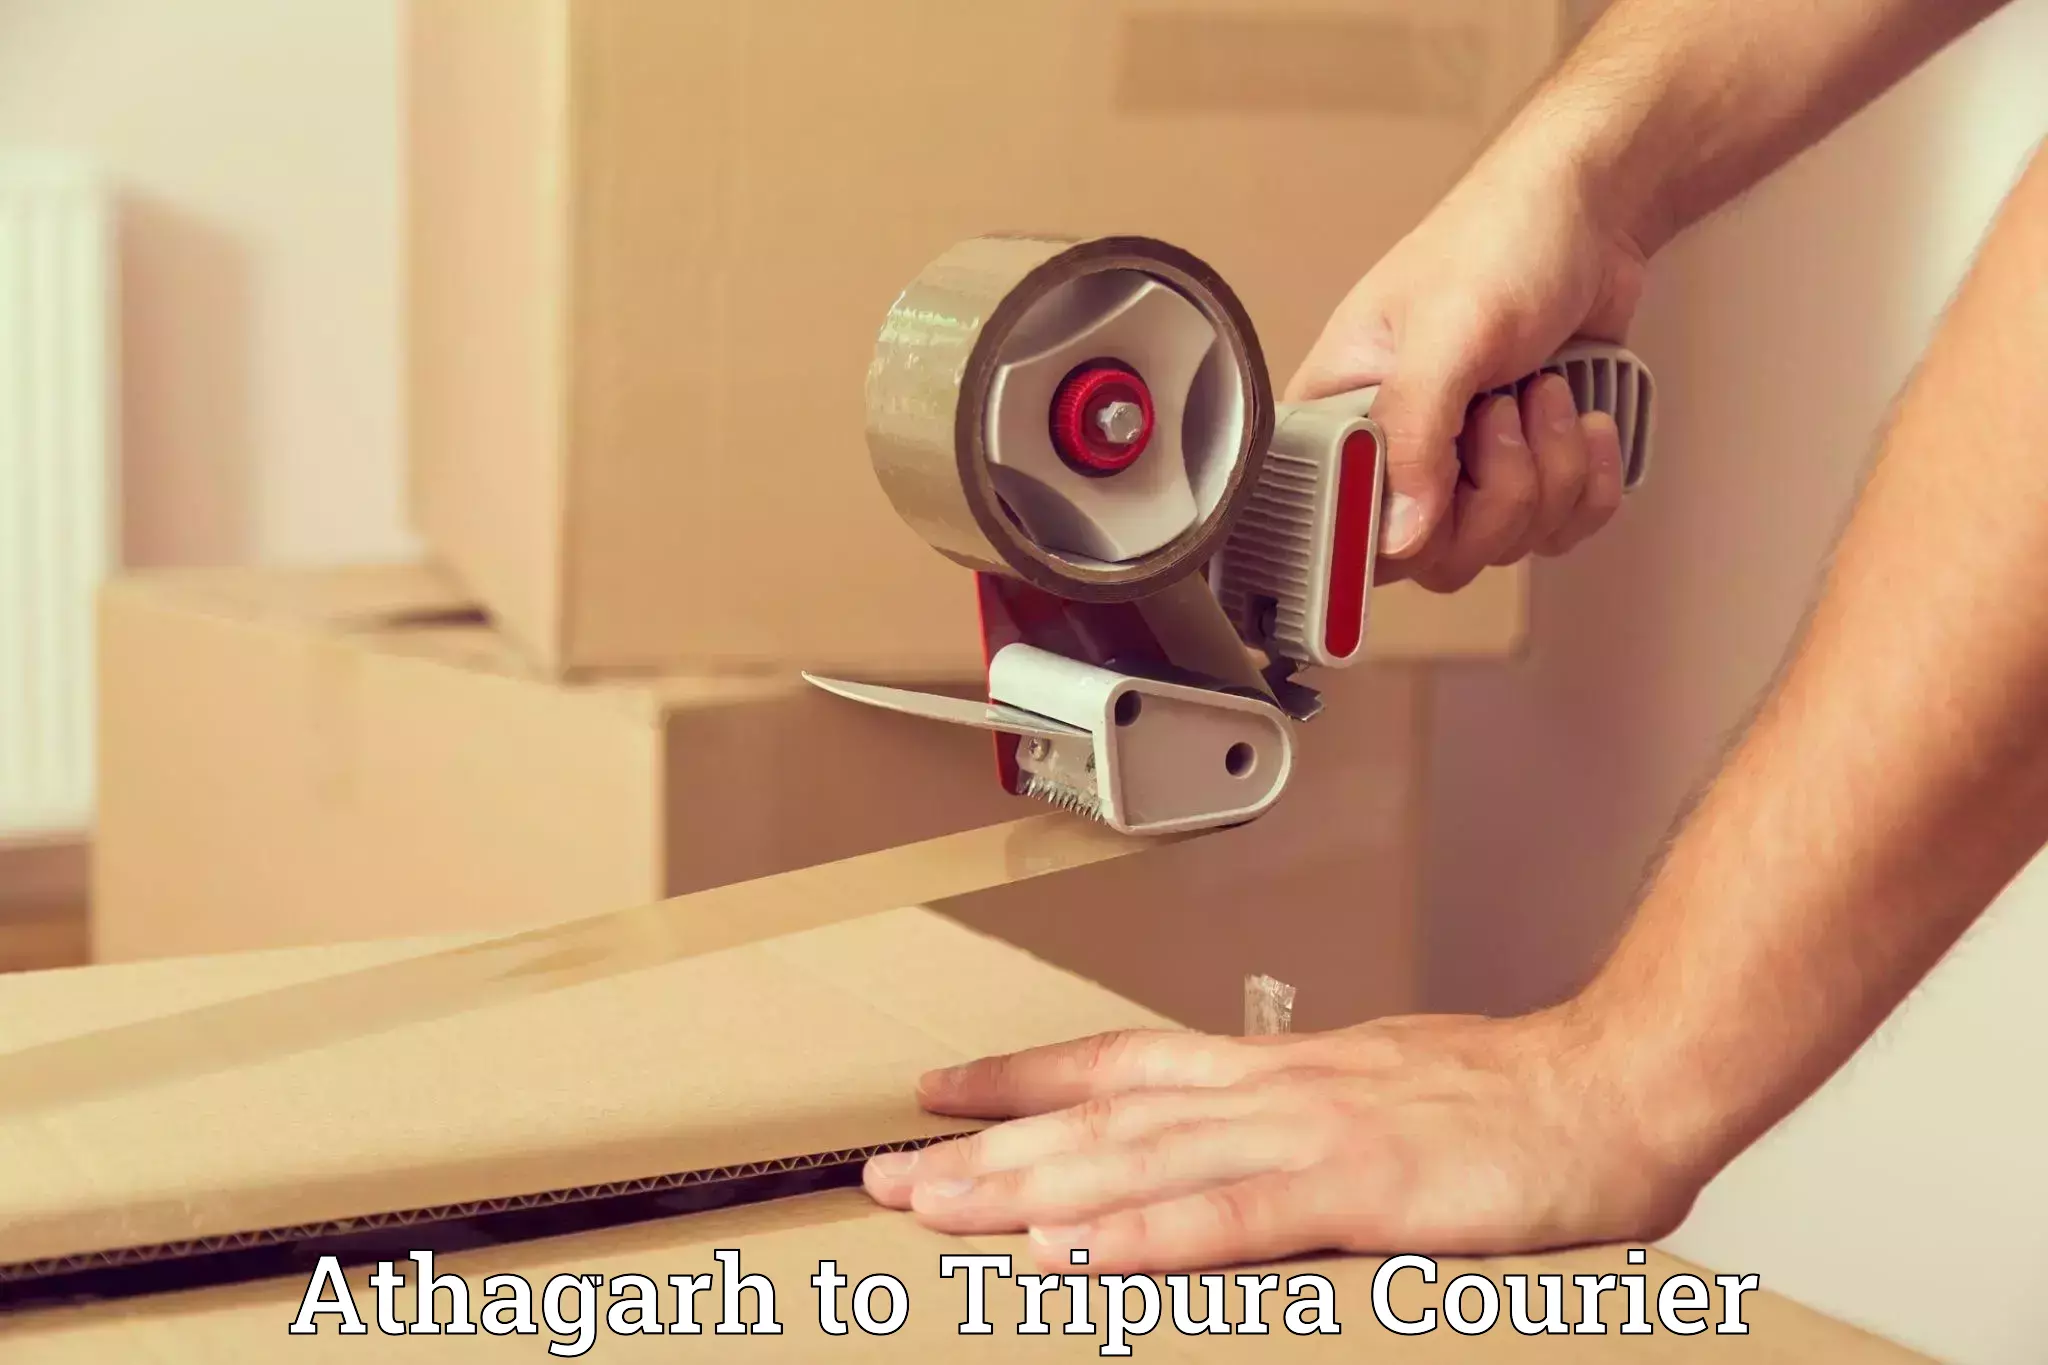 Furniture delivery service Athagarh to Tripura